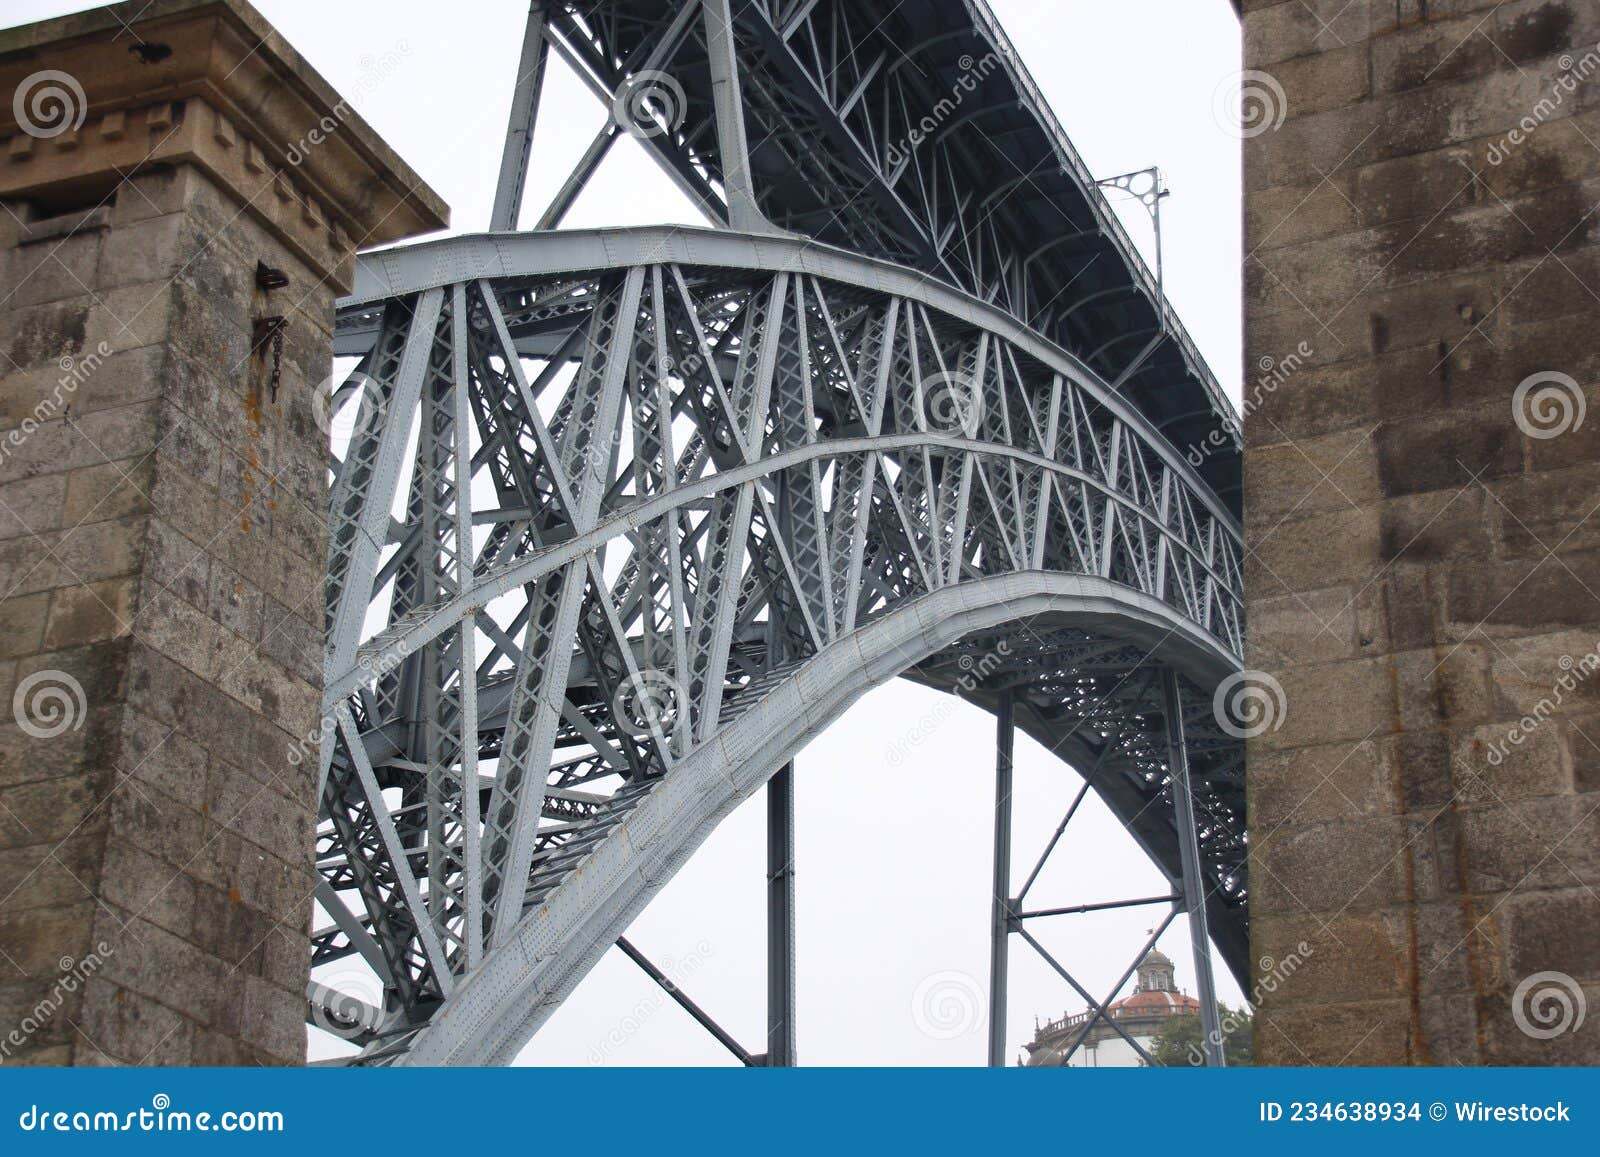 shot of the dom luis i bridge in vila nova de gaia in portugal